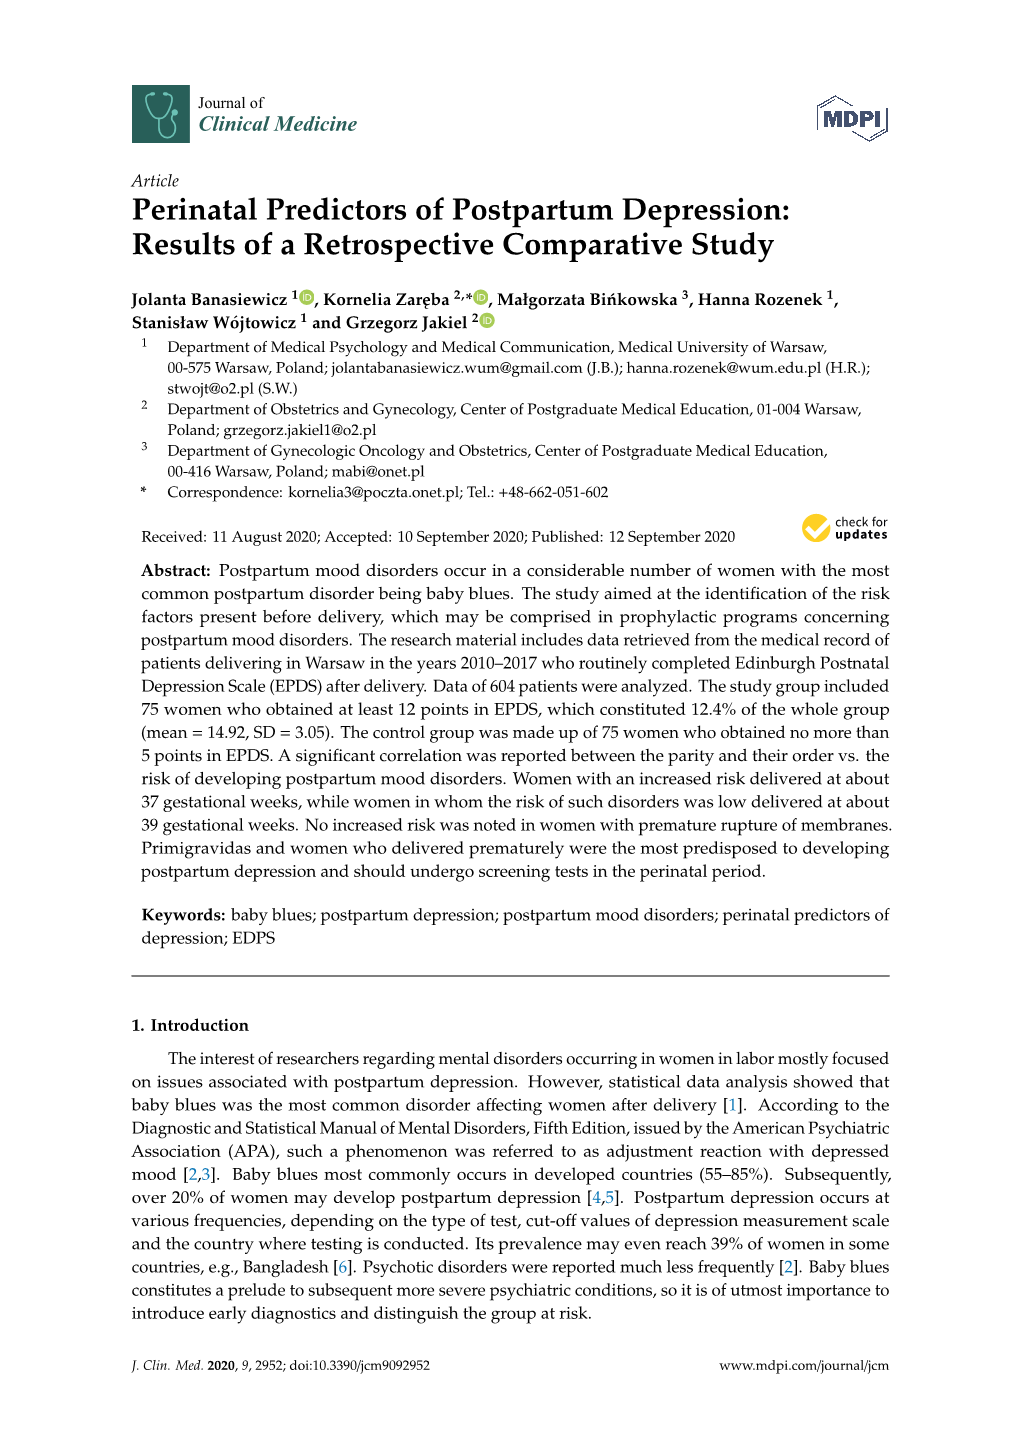 Perinatal Predictors of Postpartum Depression: Results of a Retrospective Comparative Study